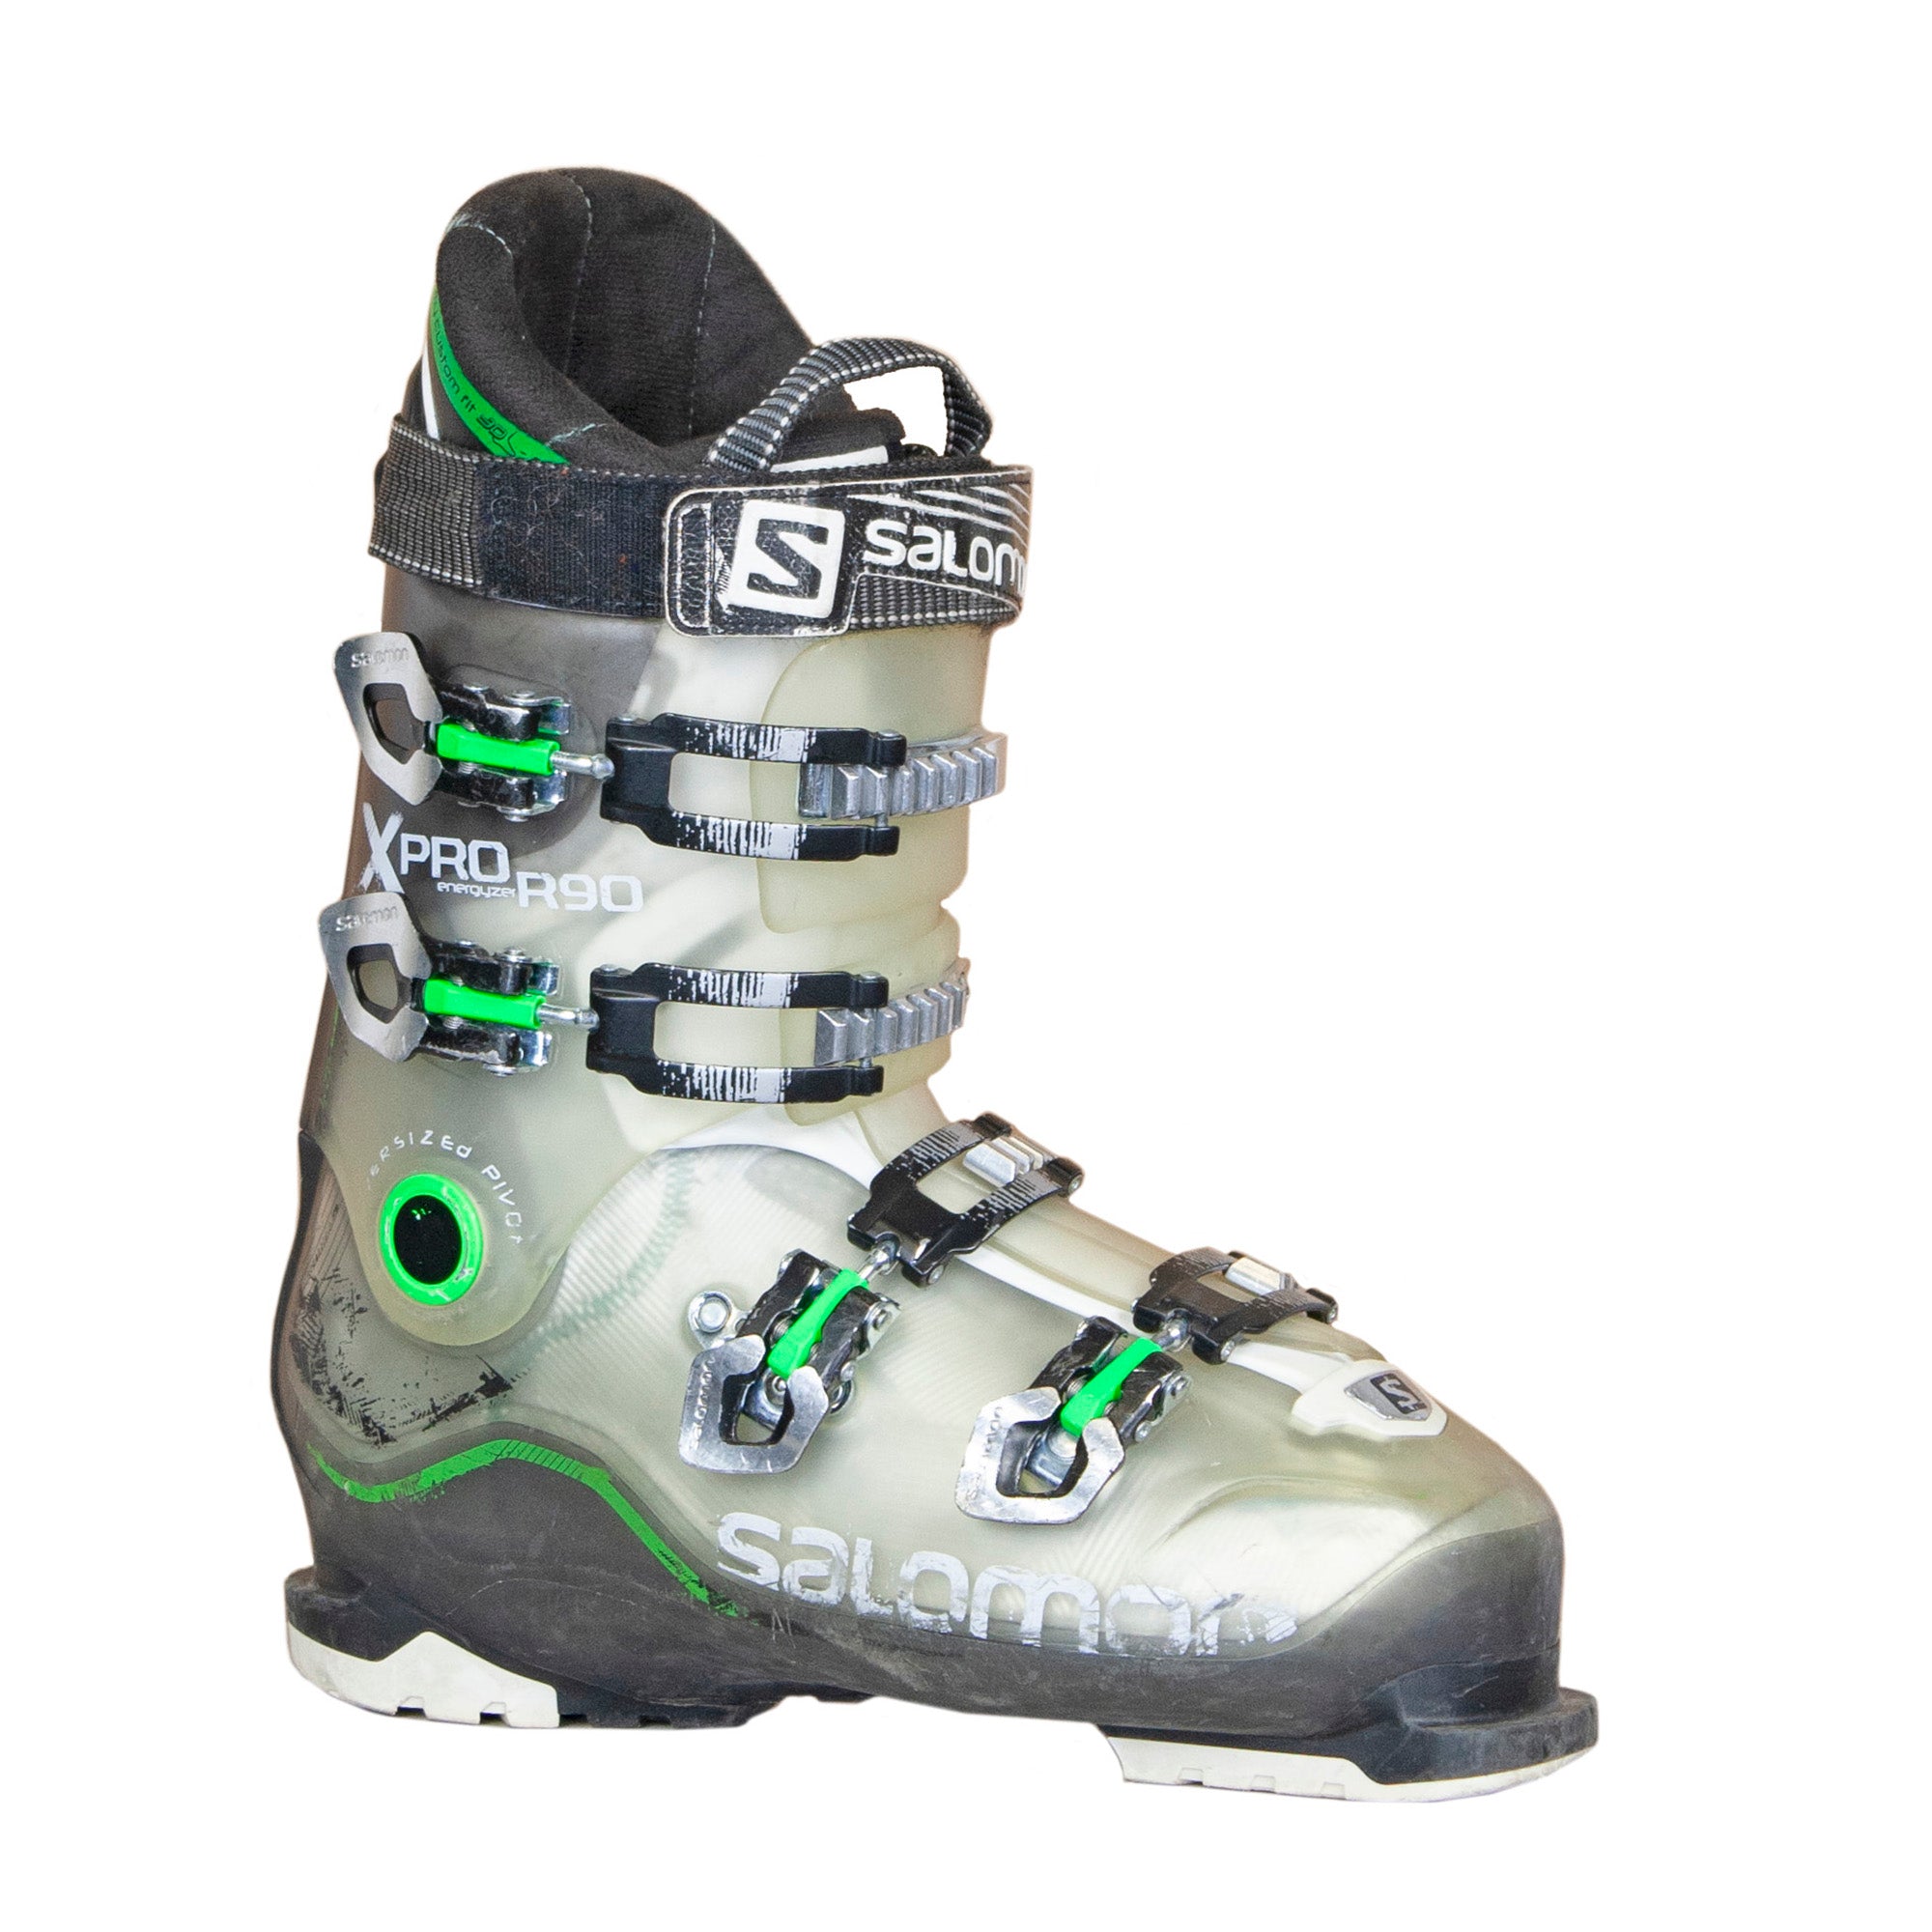 Recite Napier Tyr Used Salomon X Pro R90 Ski Boots - Galactic Snow Sports